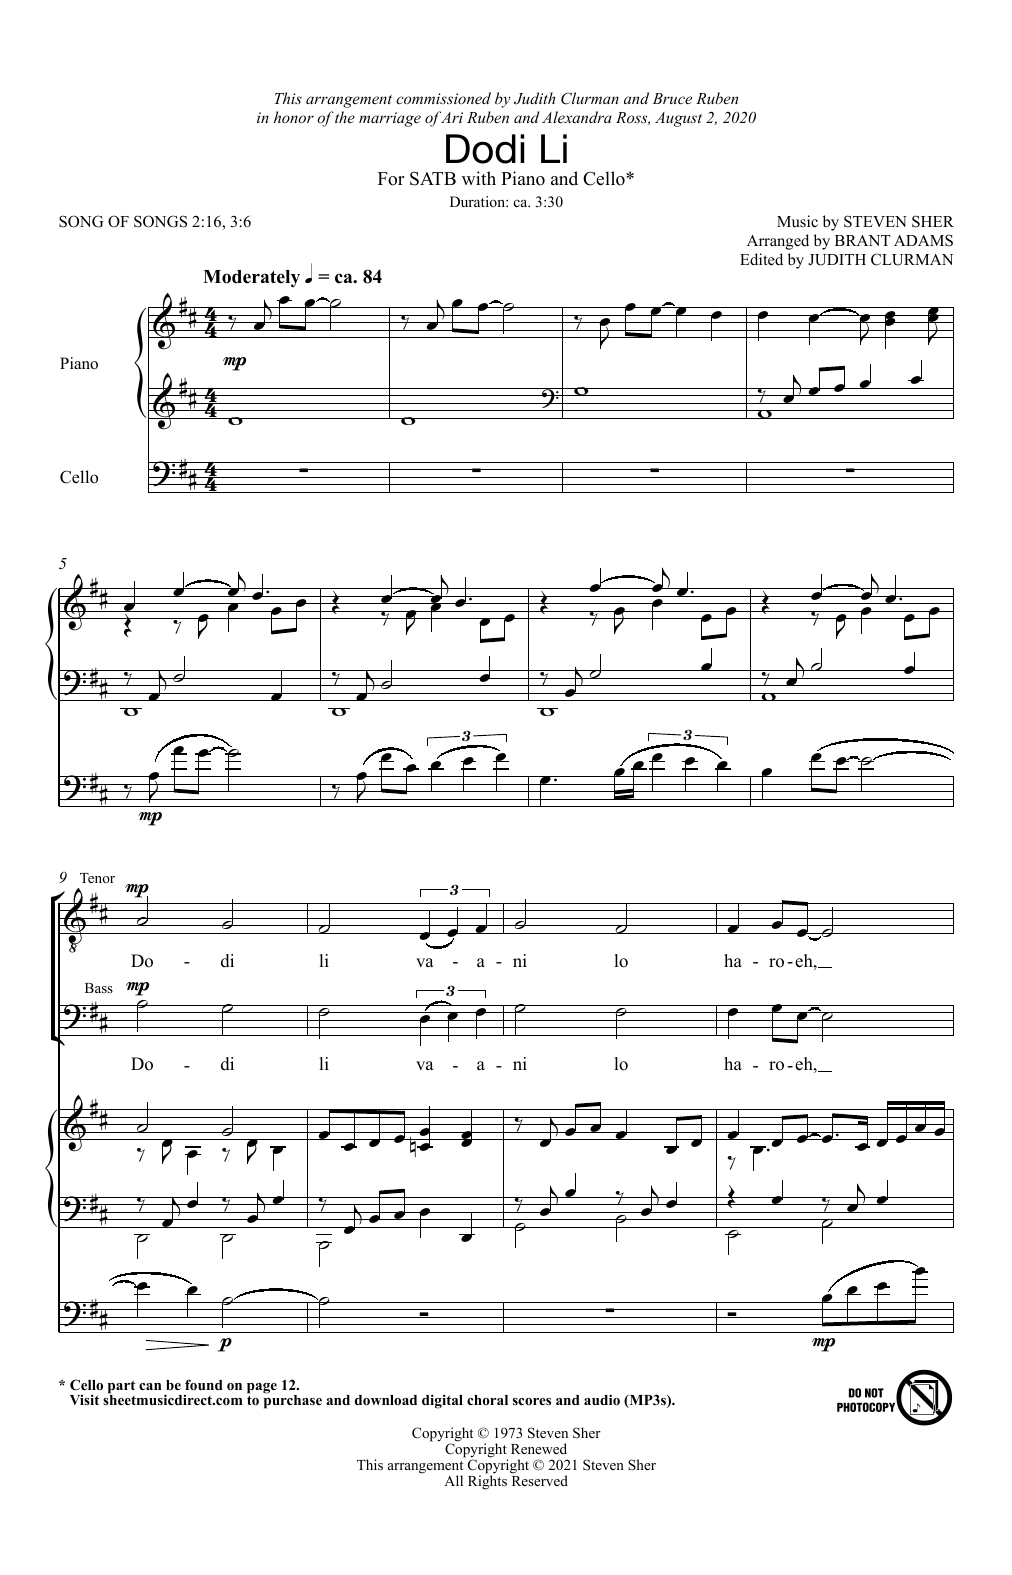 Download Steven Sher Dodi Li (arr. Brant Adams) Sheet Music and learn how to play SSA Choir PDF digital score in minutes